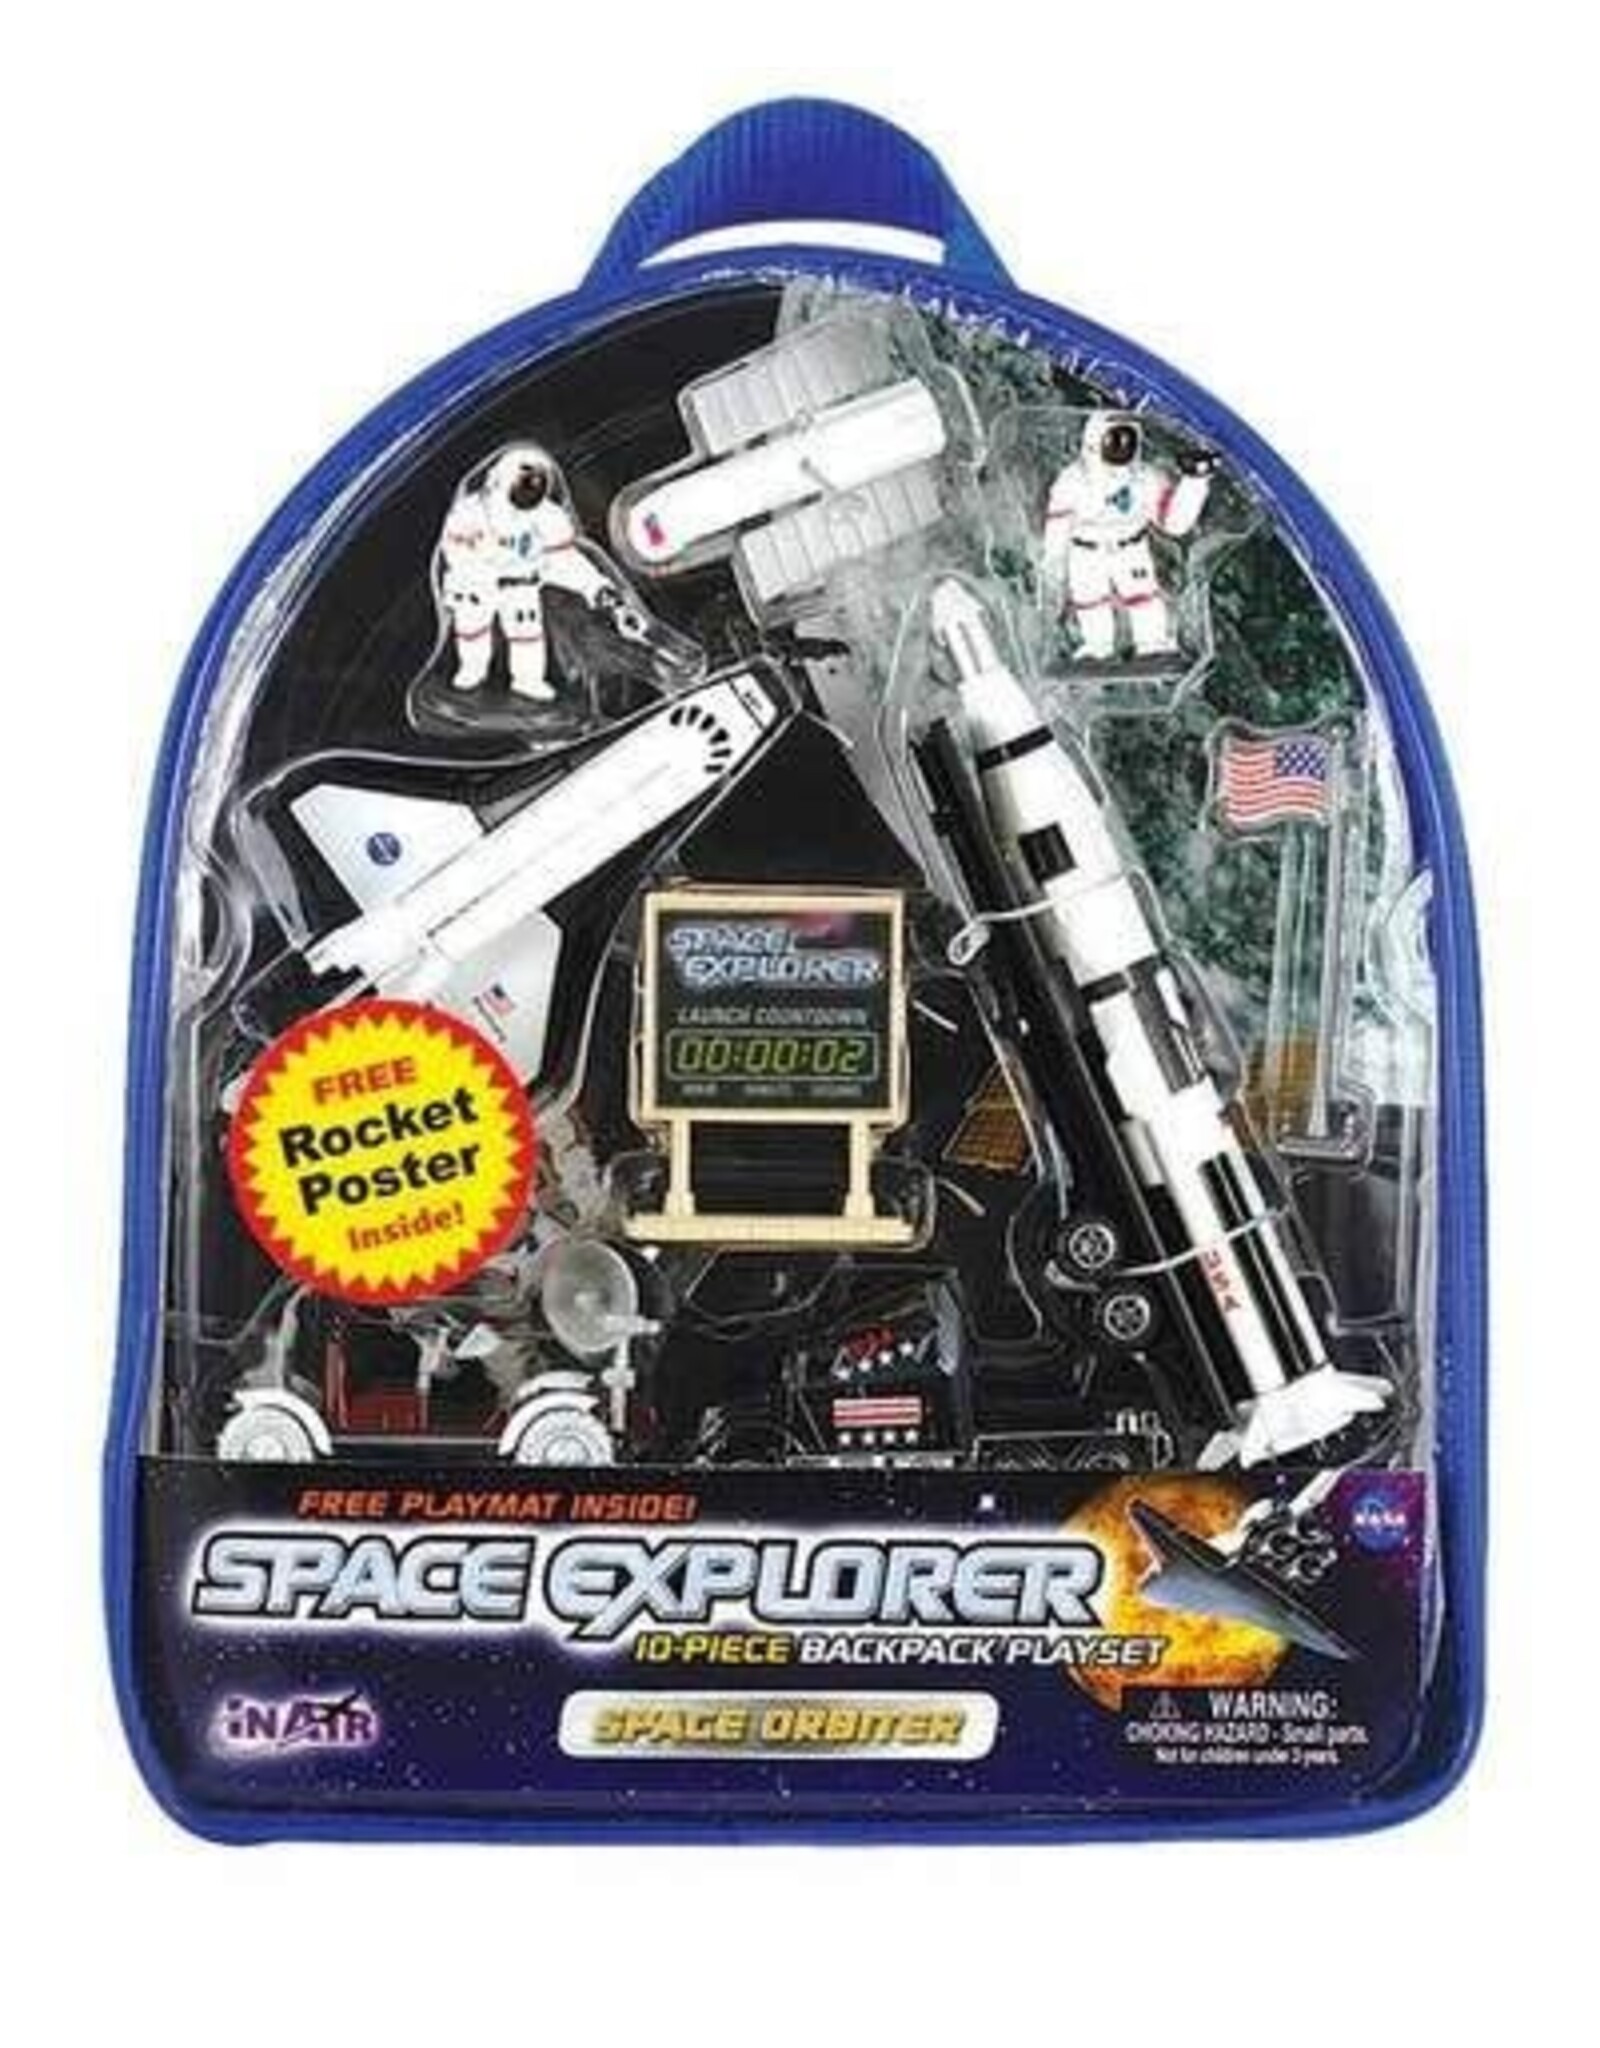 Space Explorer Space Orbiter Backpack Playset